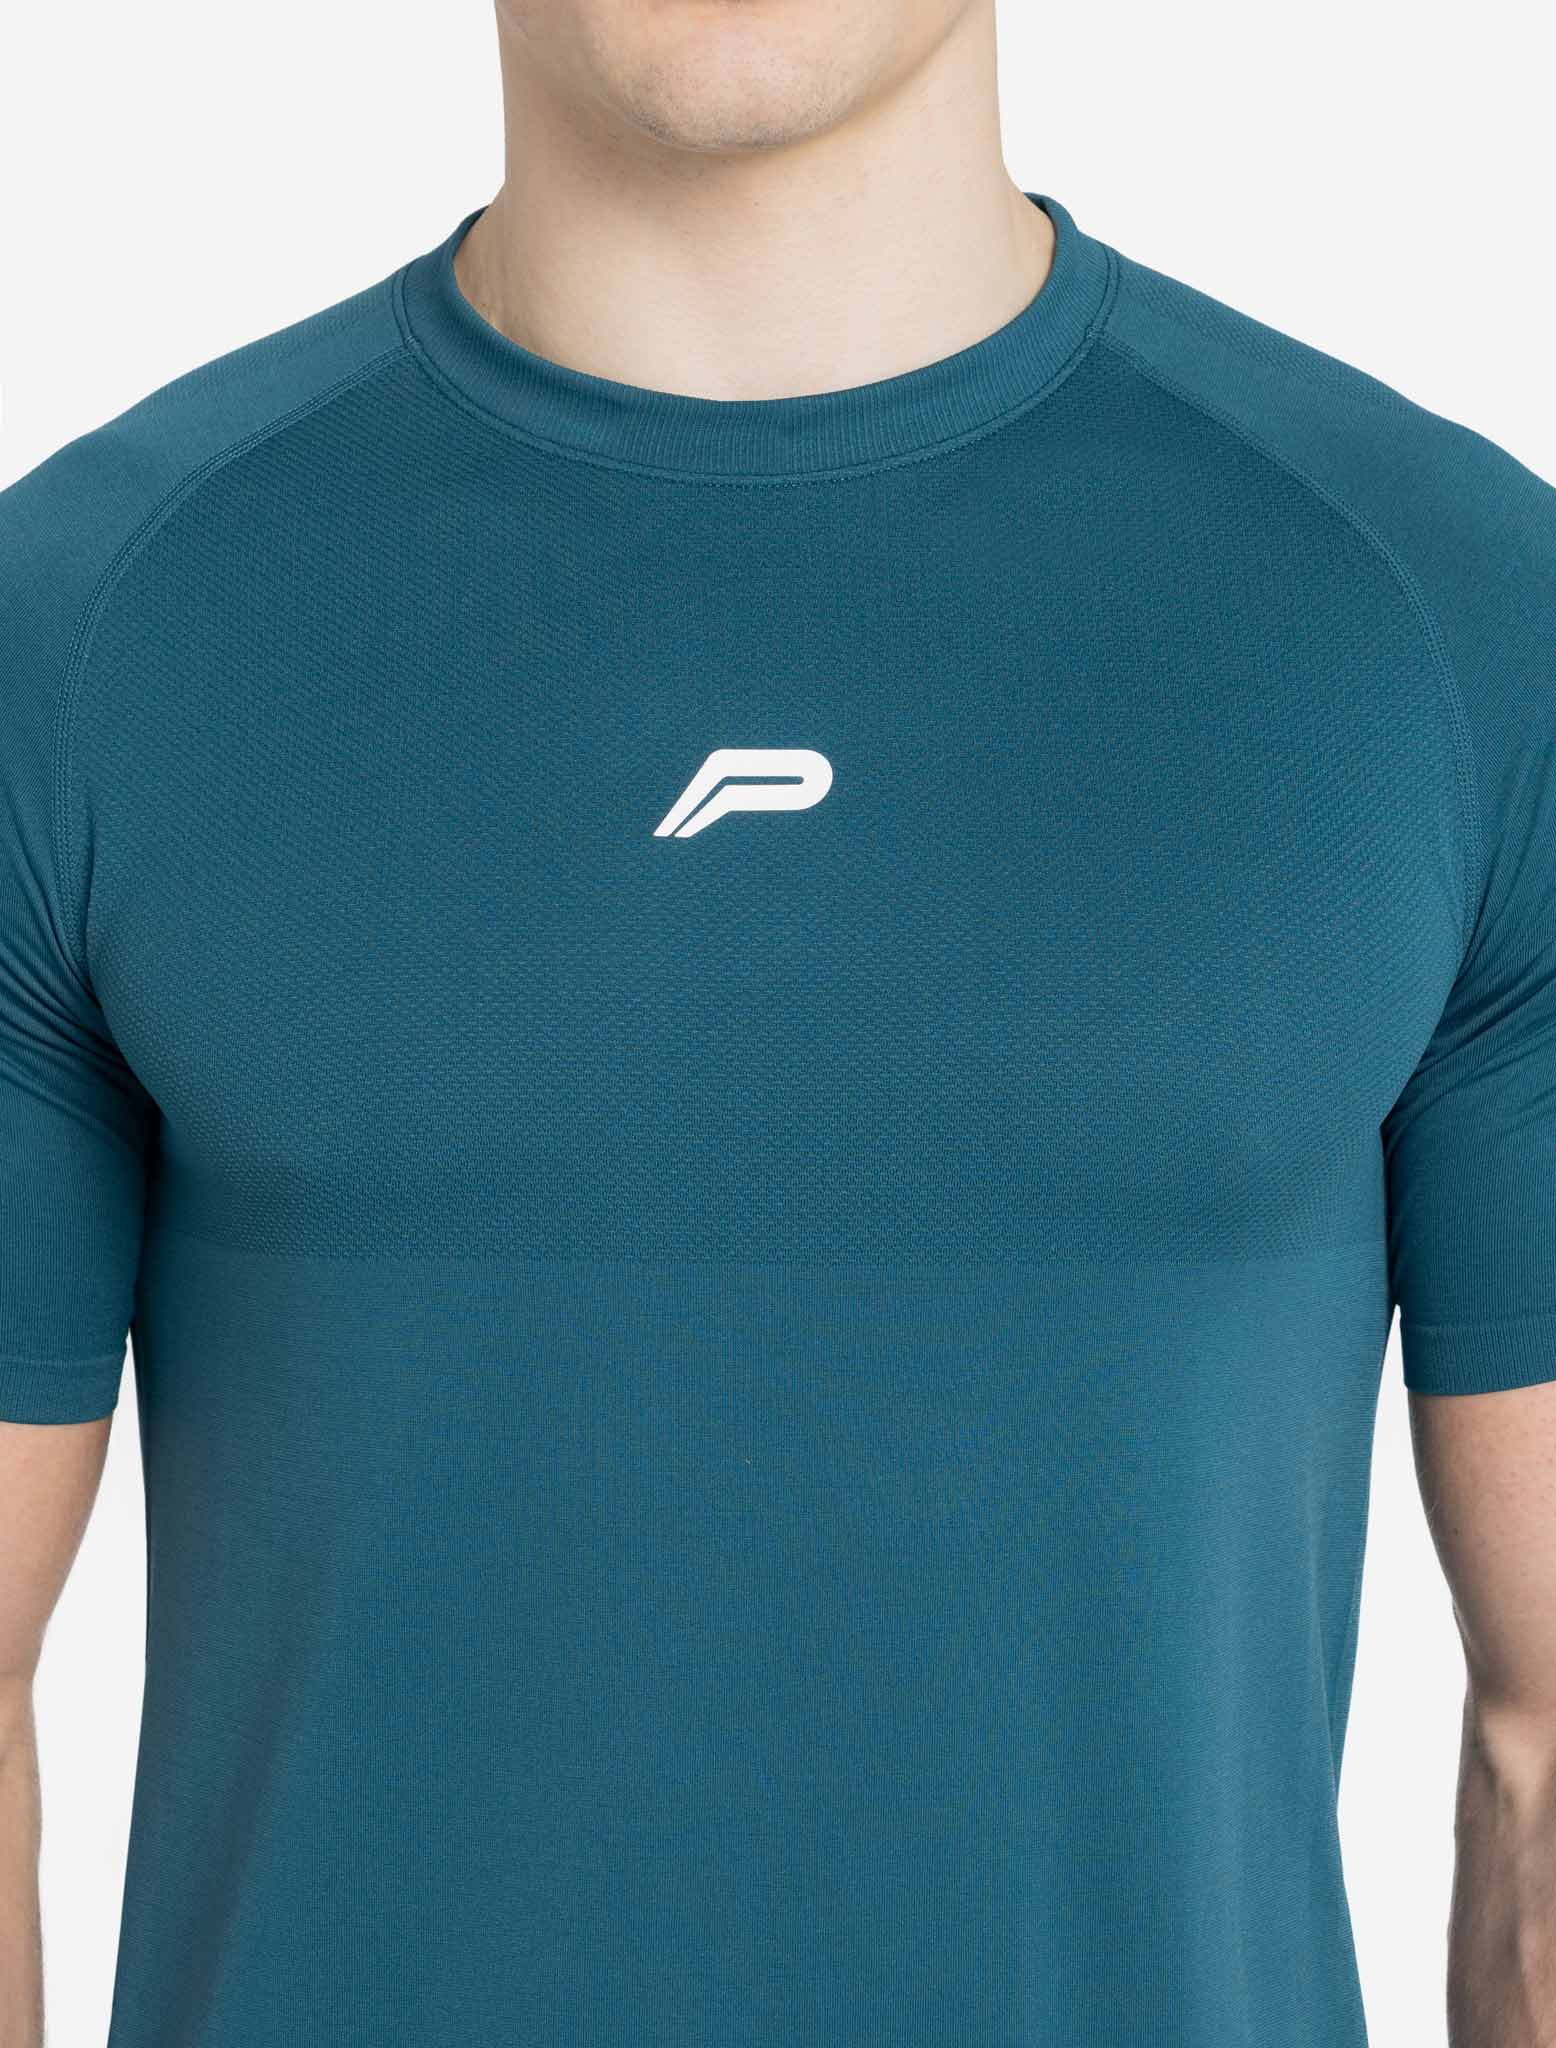 Seamless T-shirt / Teal Pursue Fitness 2